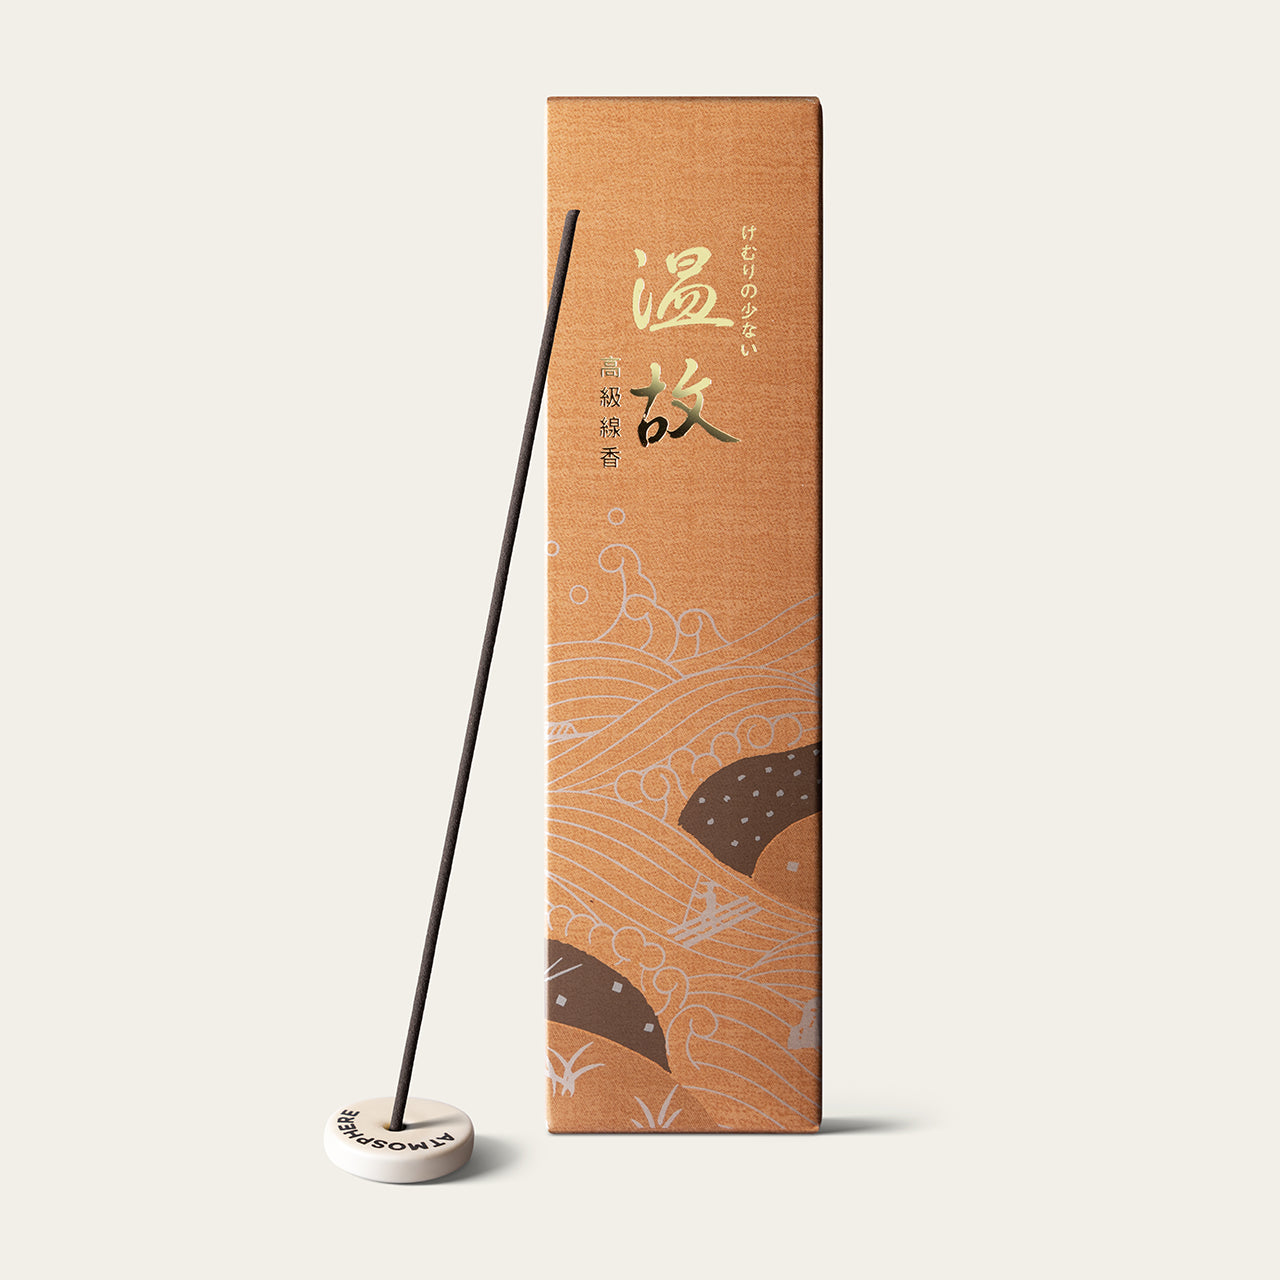 Gyokushodo Onko Homage Japanese incense sticks (25 sticks) with Atmosphere ceramic incense holder